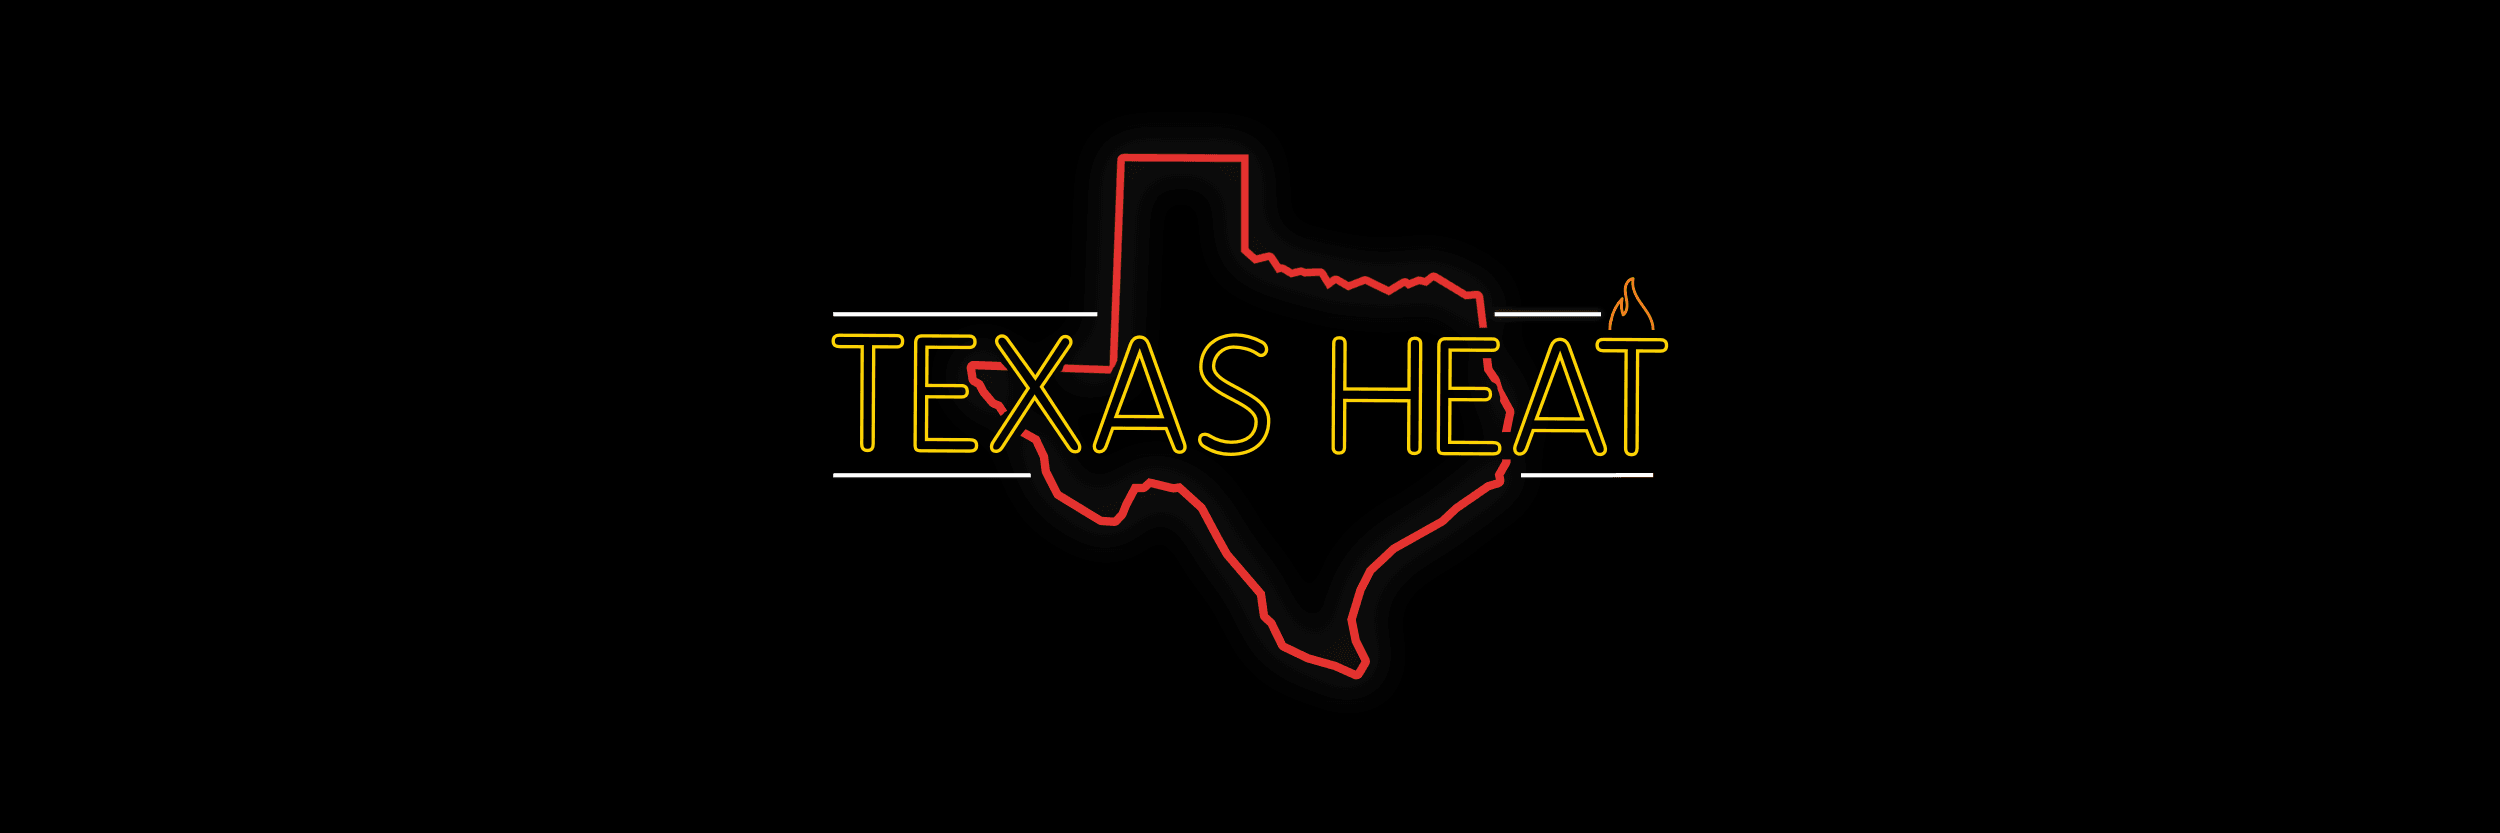 TexasHeat banner